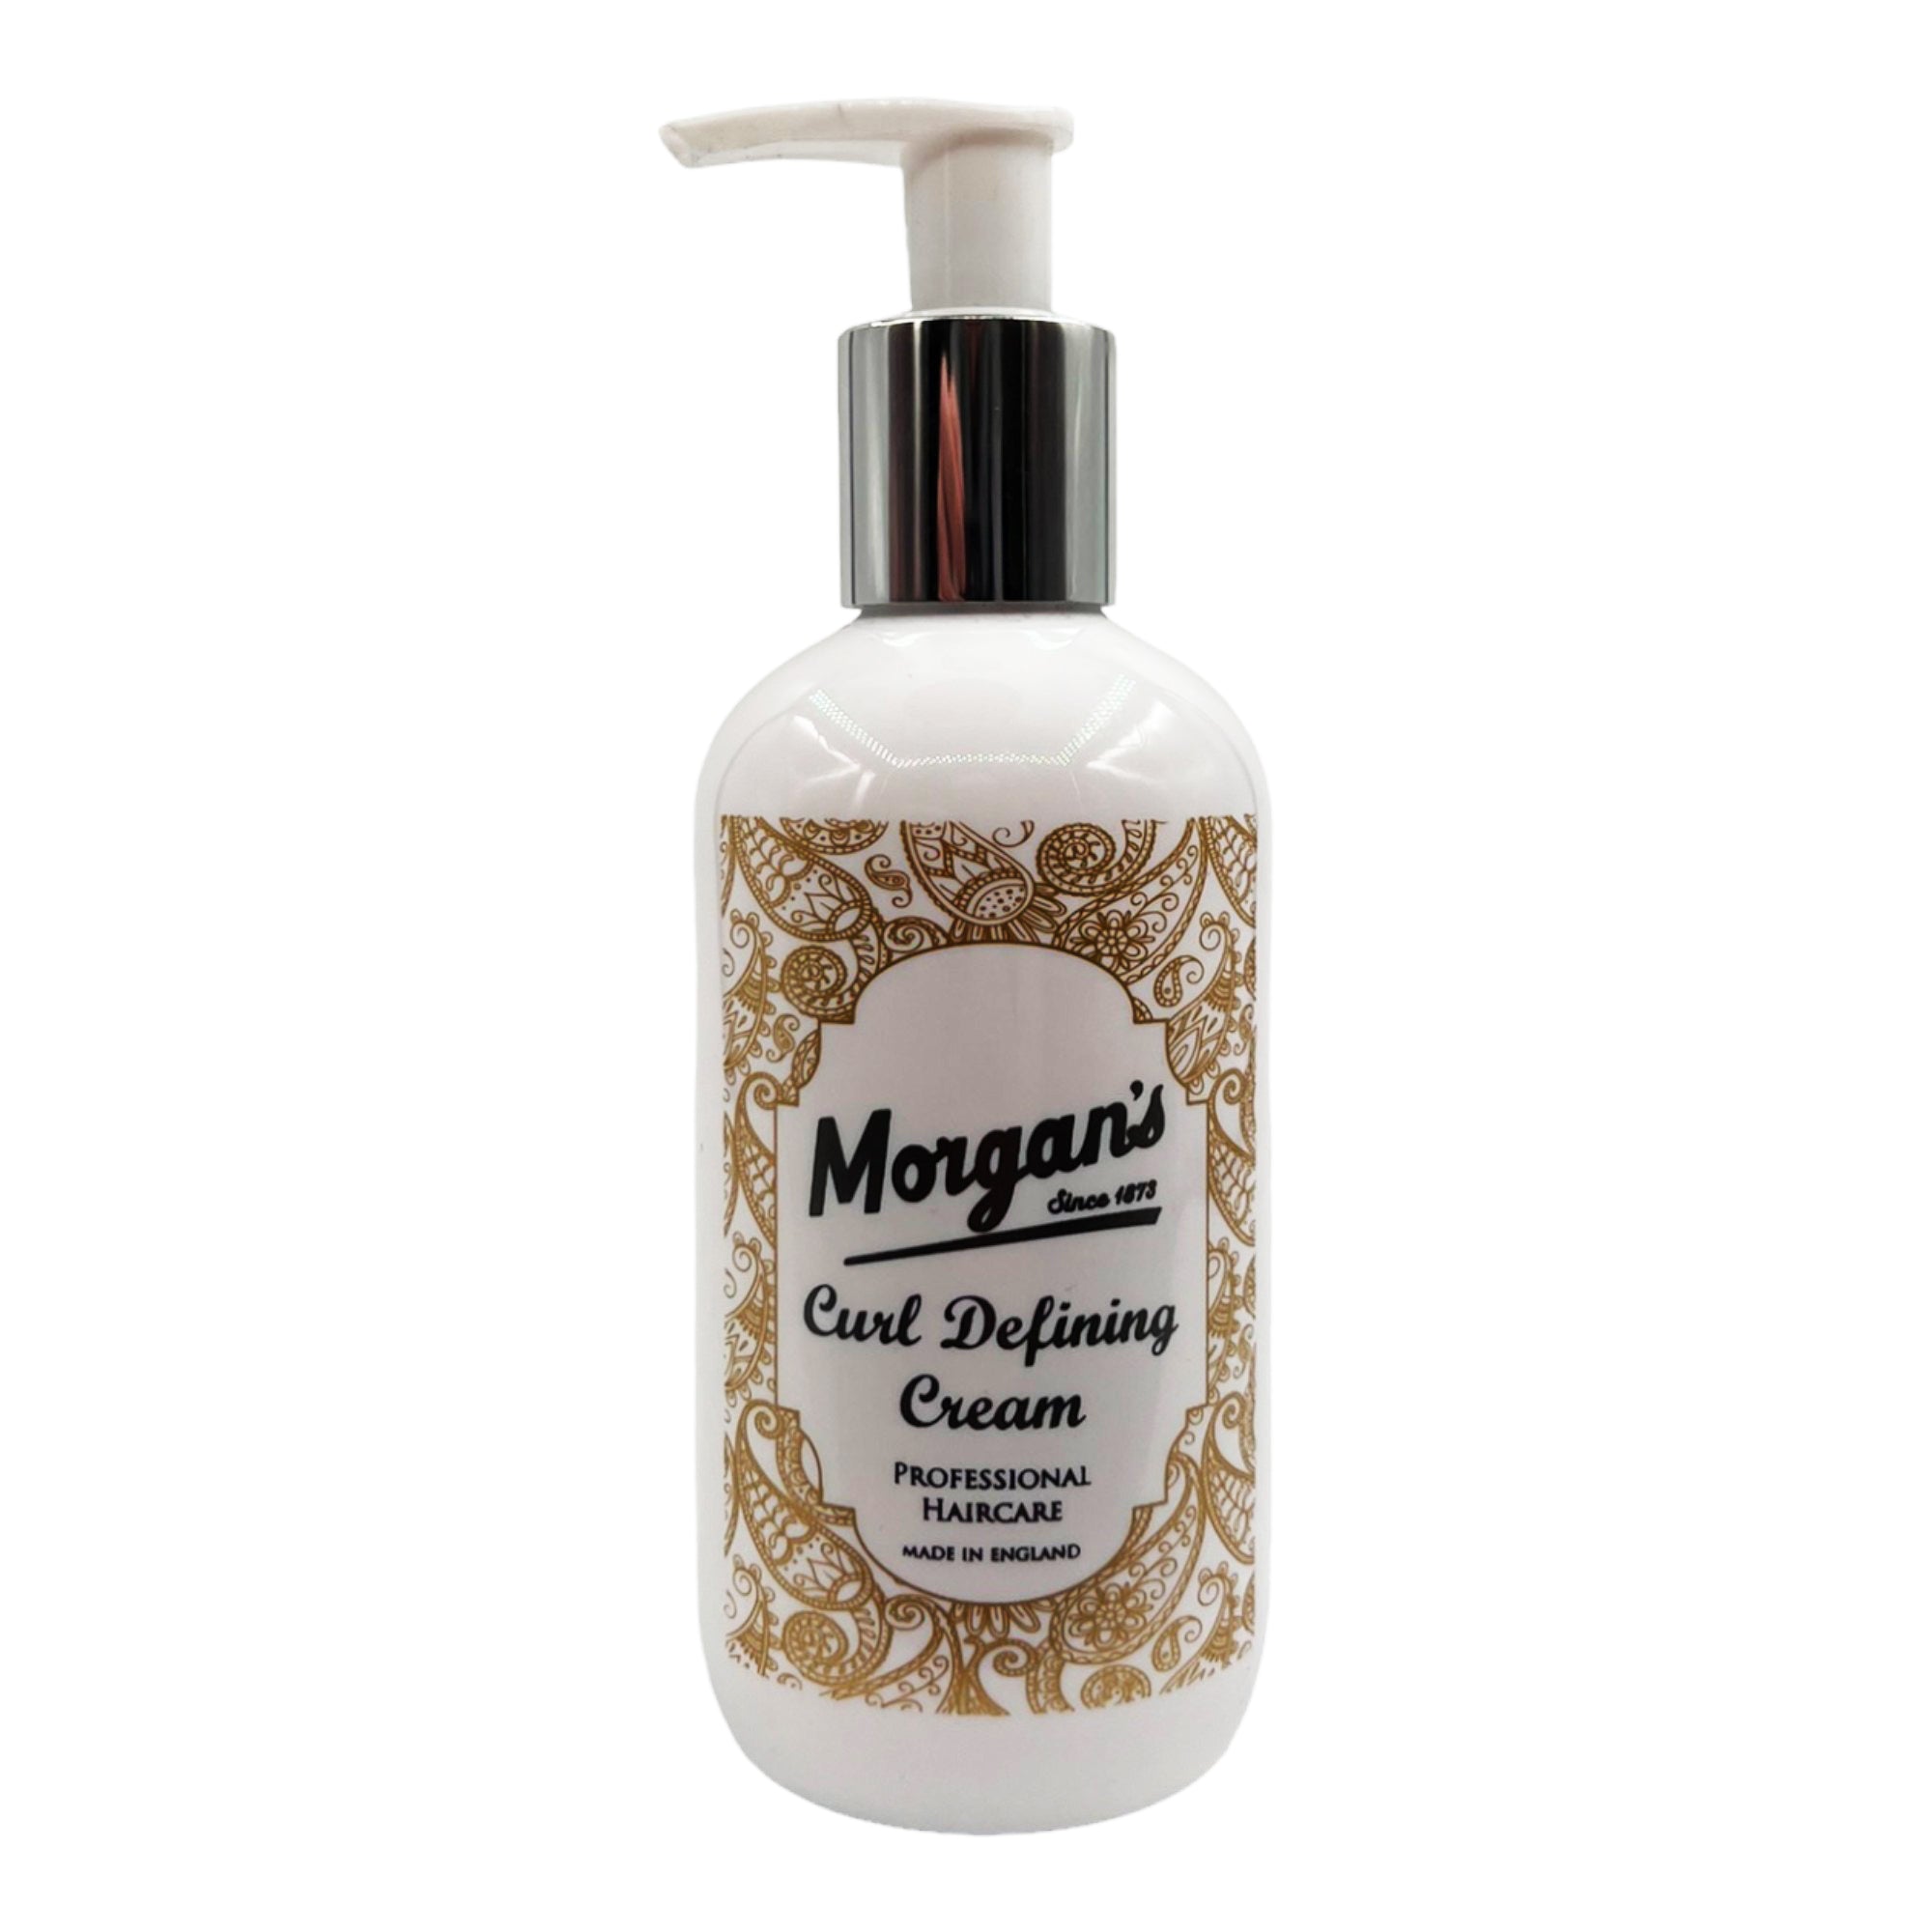 Morgan's - Curl Defining Cream 250ml